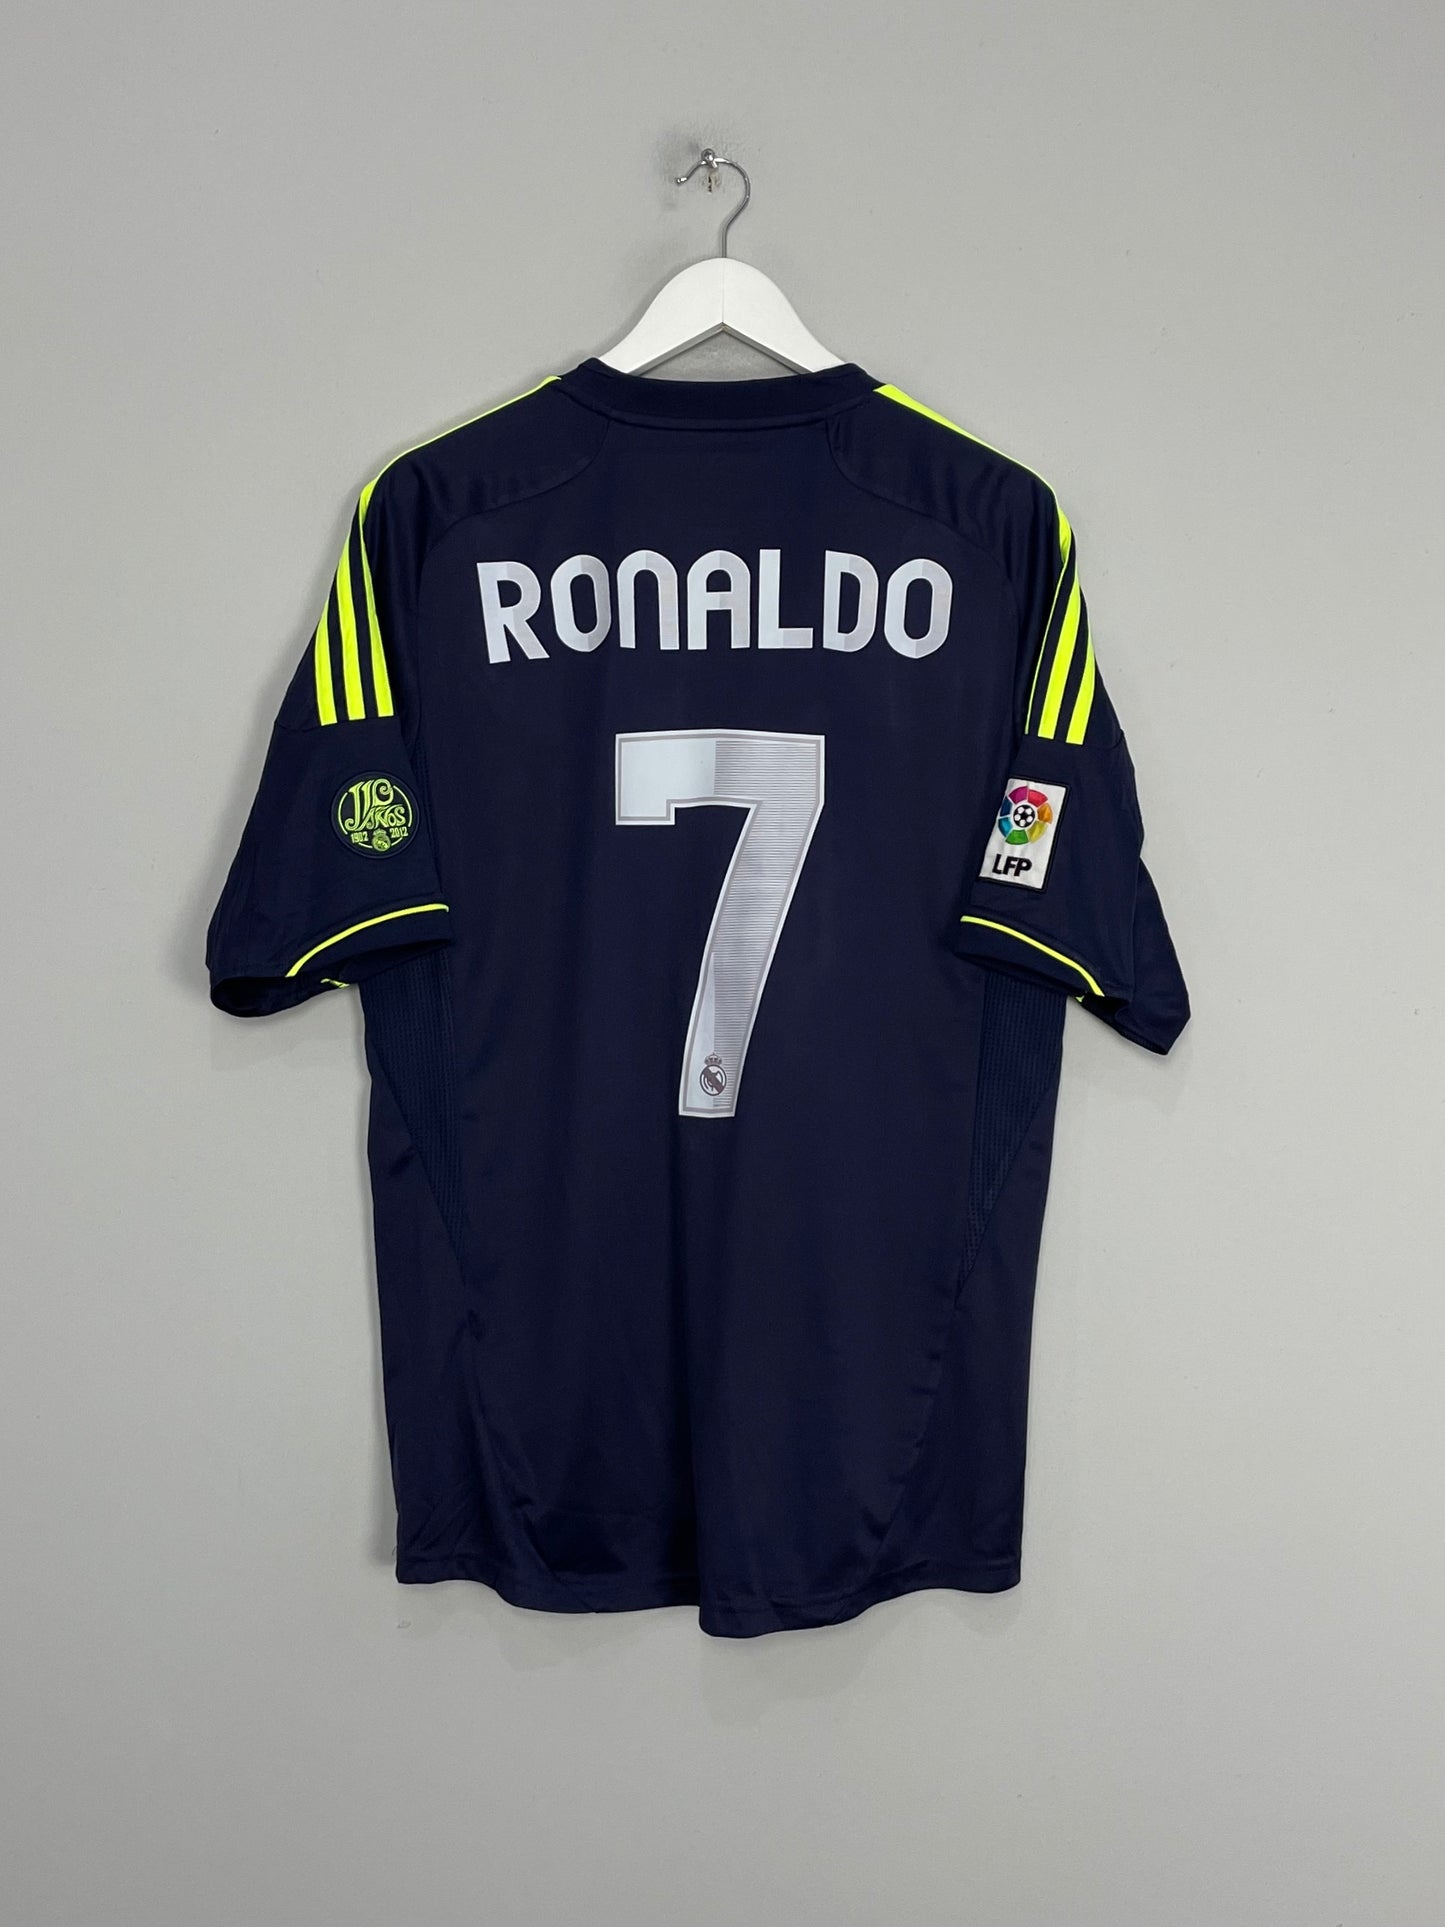 2012/13 REAL MADRID RONALDO #7 AWAY SHIRT (L) ADIDAS